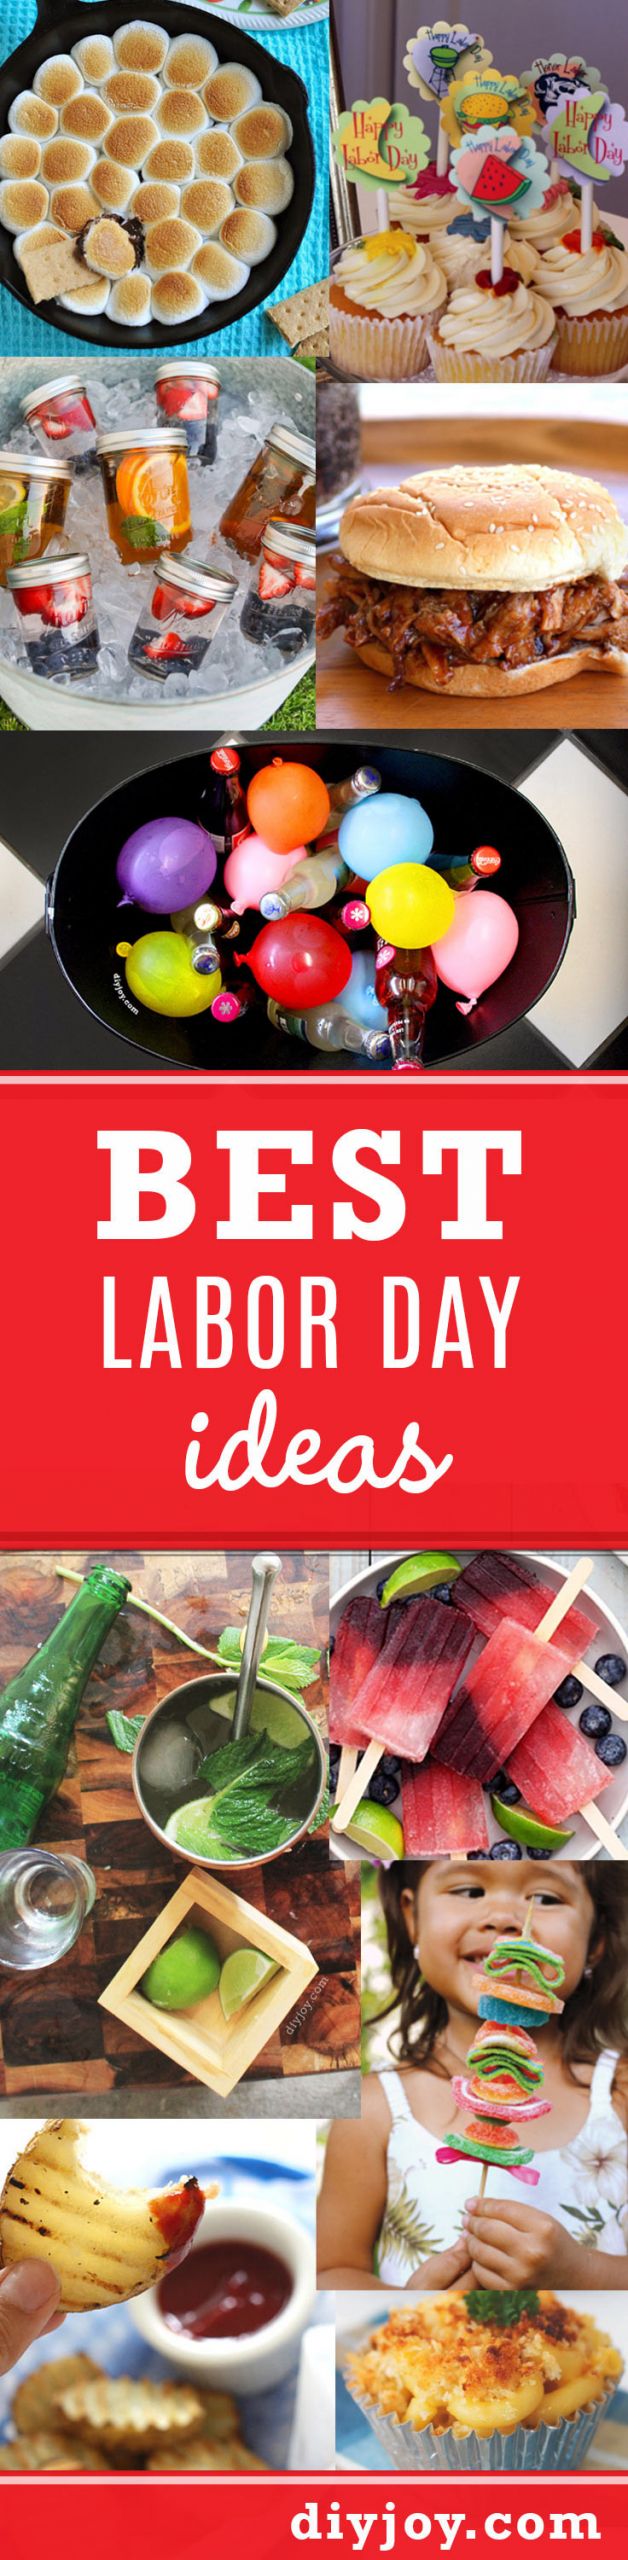 Labor Day Celebration Ideas
 Quick & Easy DIY Ideas to Make Your Labor Day Celebration